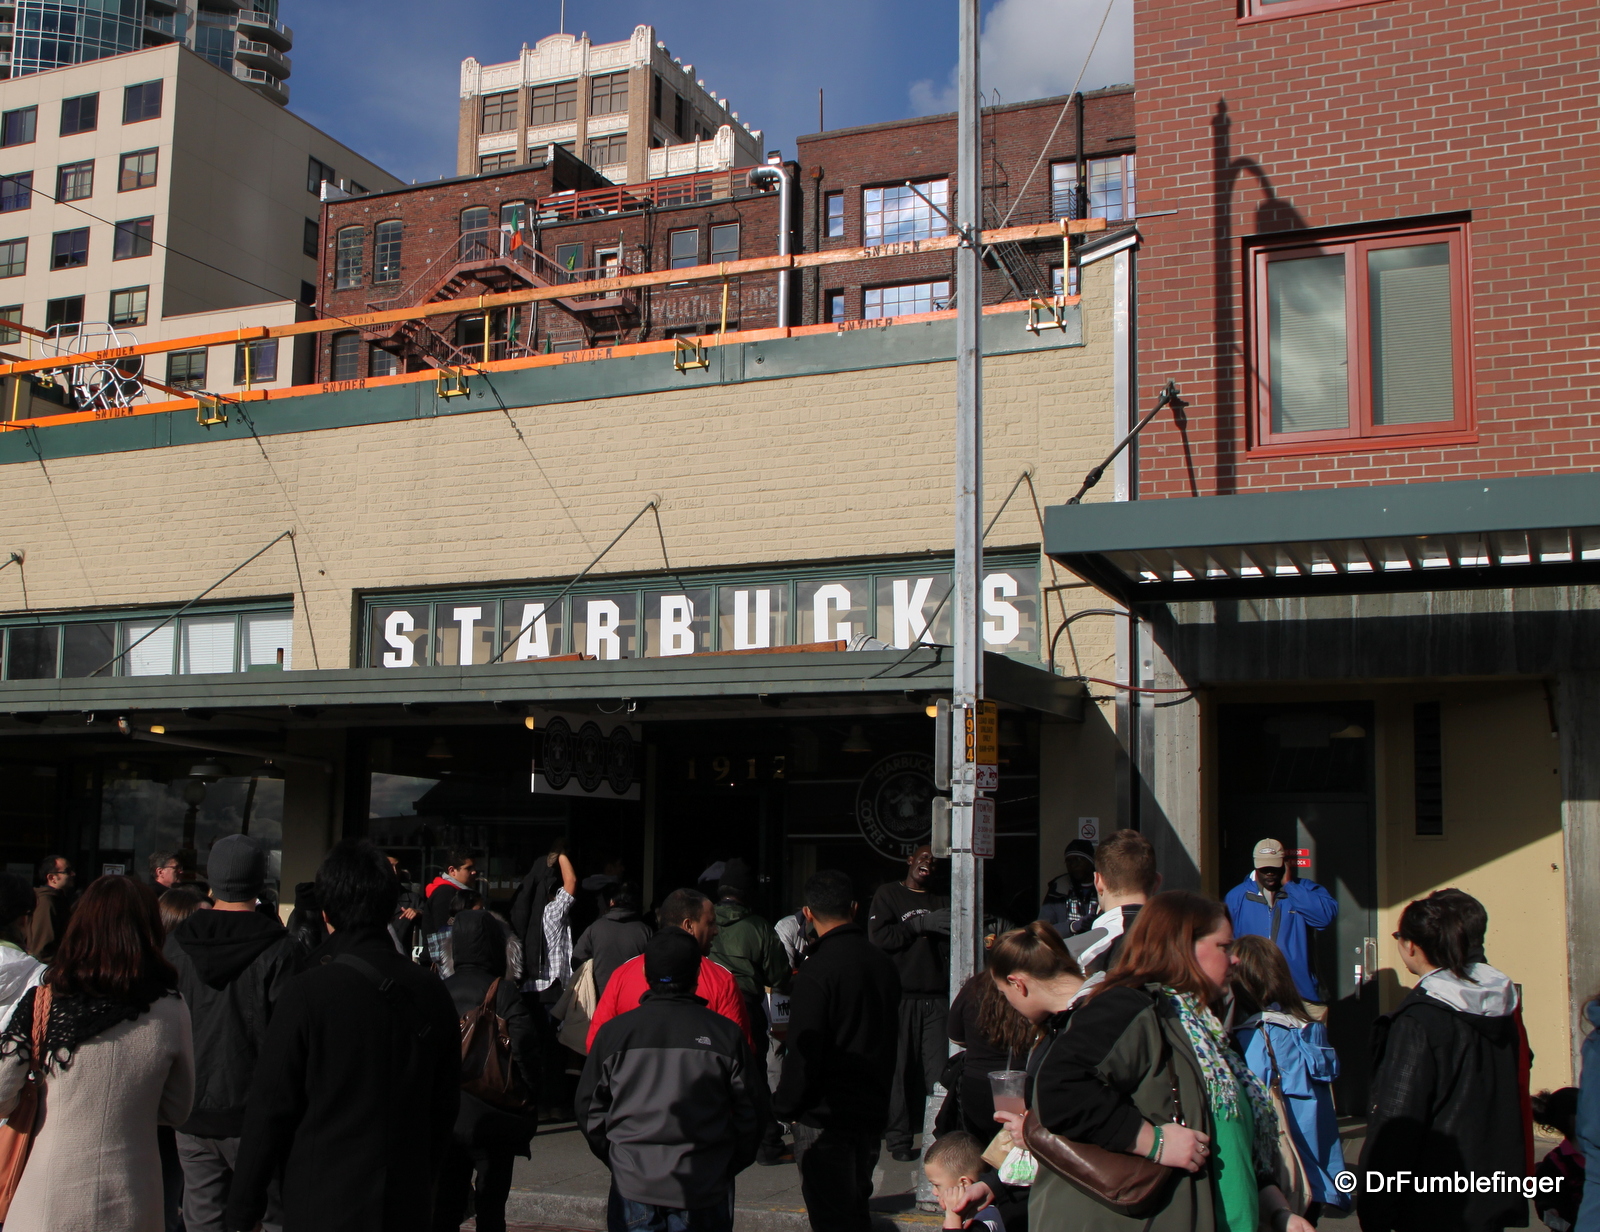 The Original Starbuck's, Pike's Market